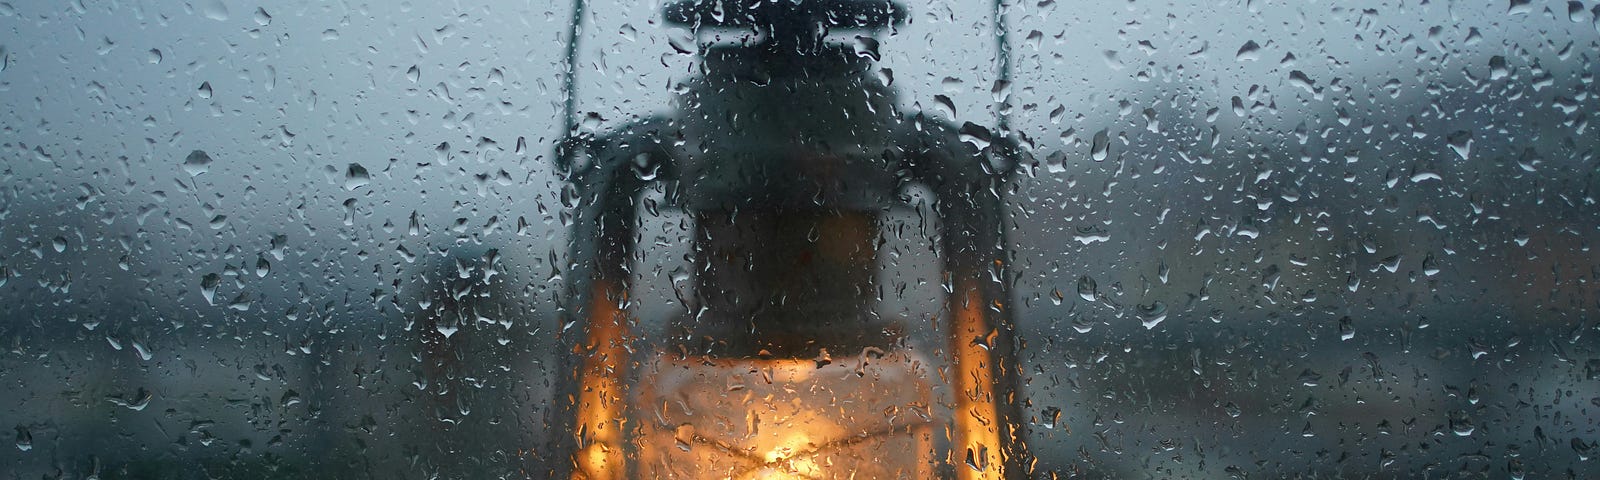 A lit lantern in the rain